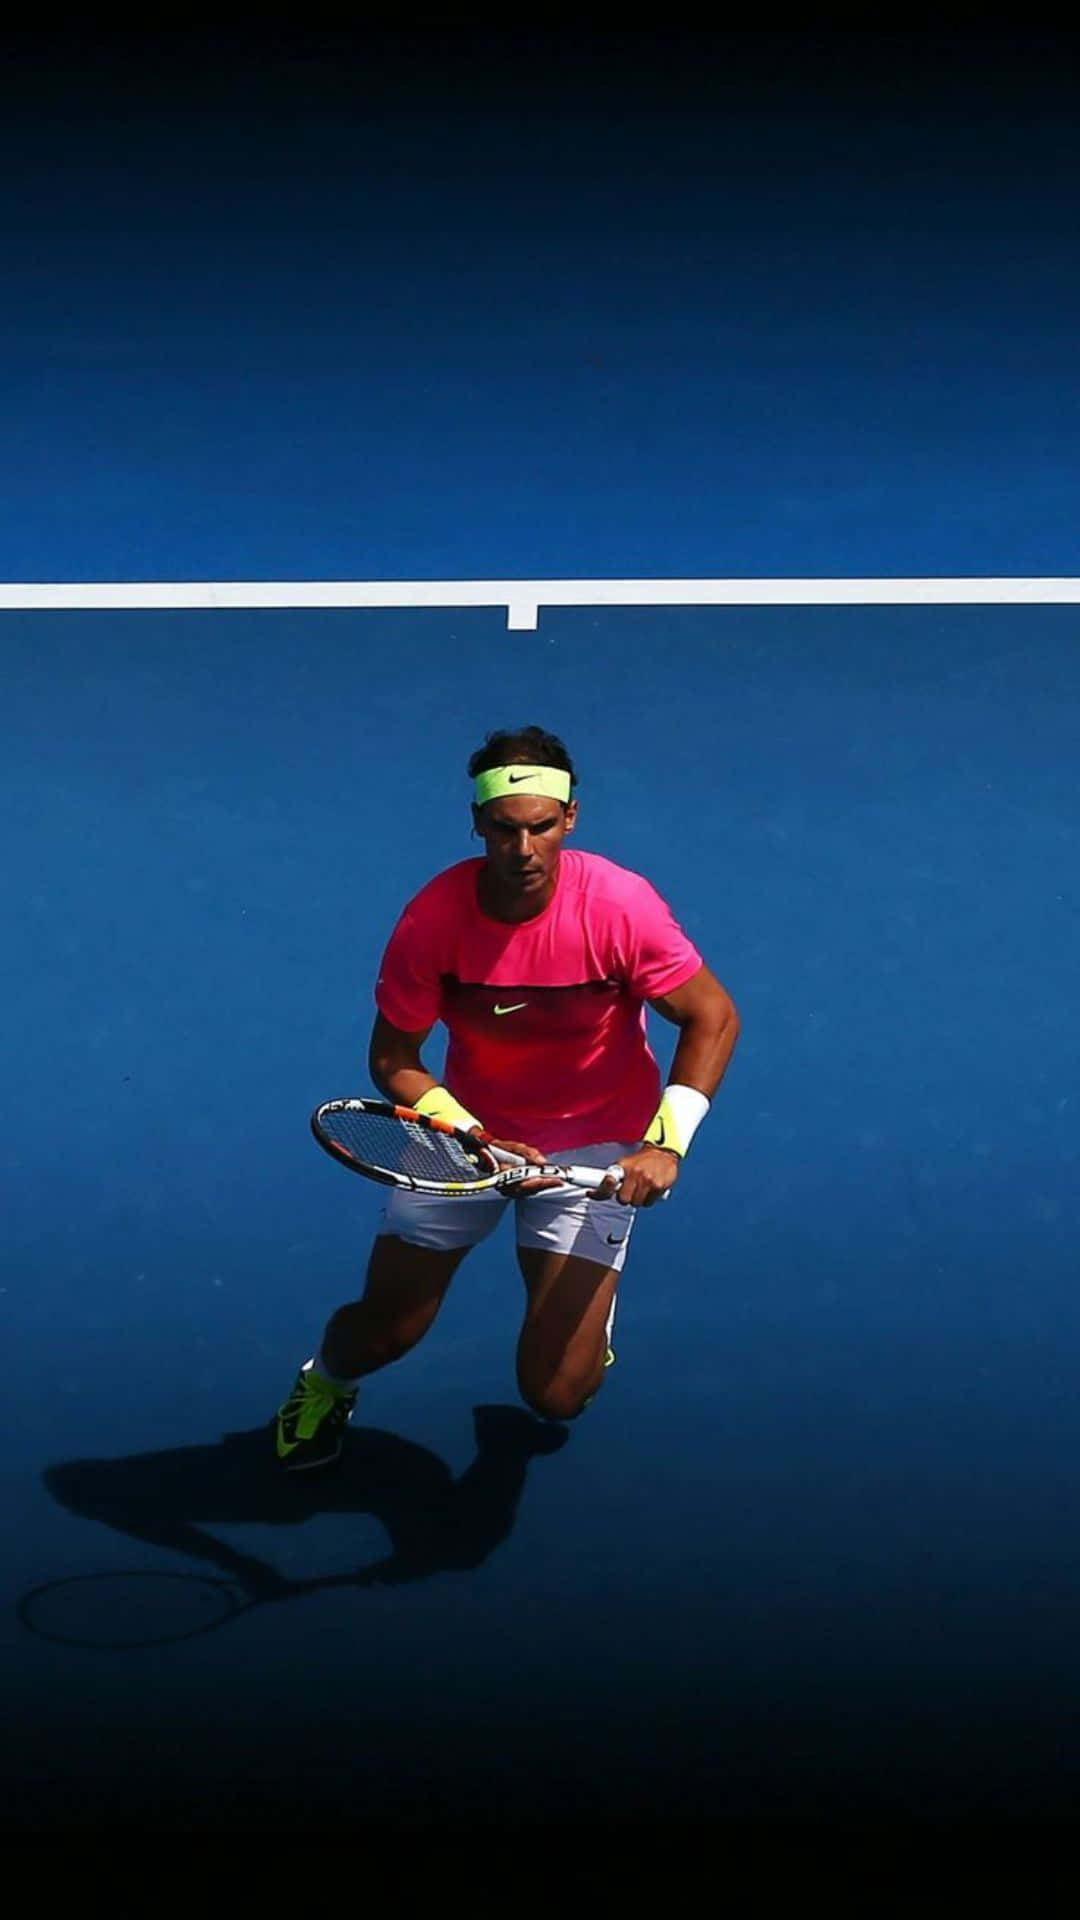 HD Tennis Player Rafael Nadal On Court Background